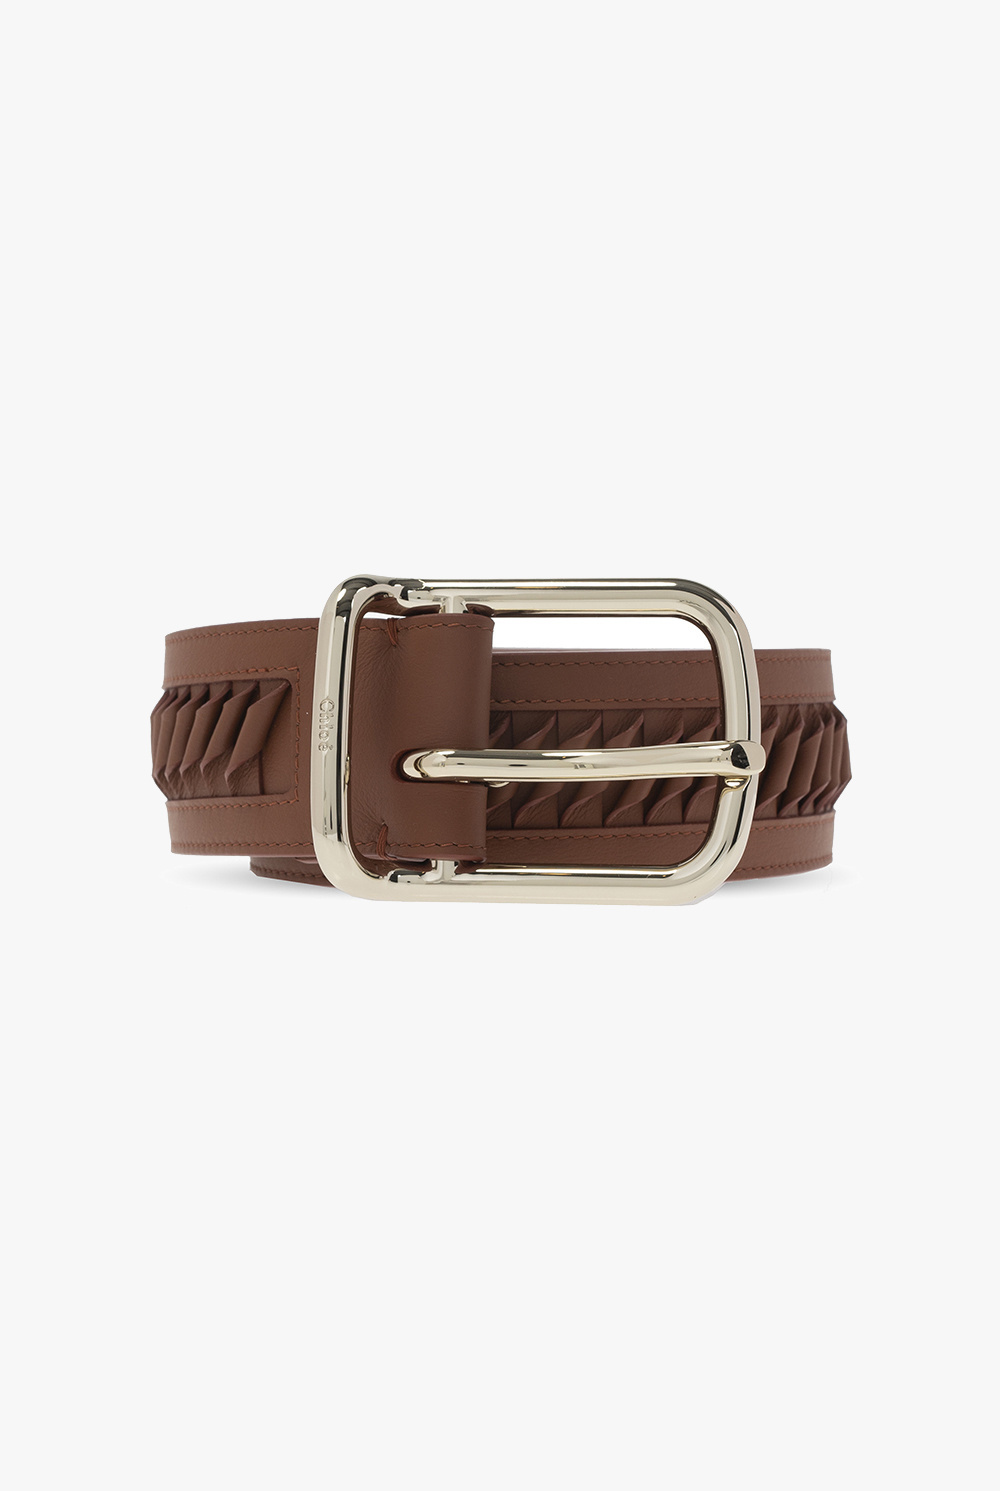 Chloé 'Joe' leather belt | Women's Accessories | Vitkac